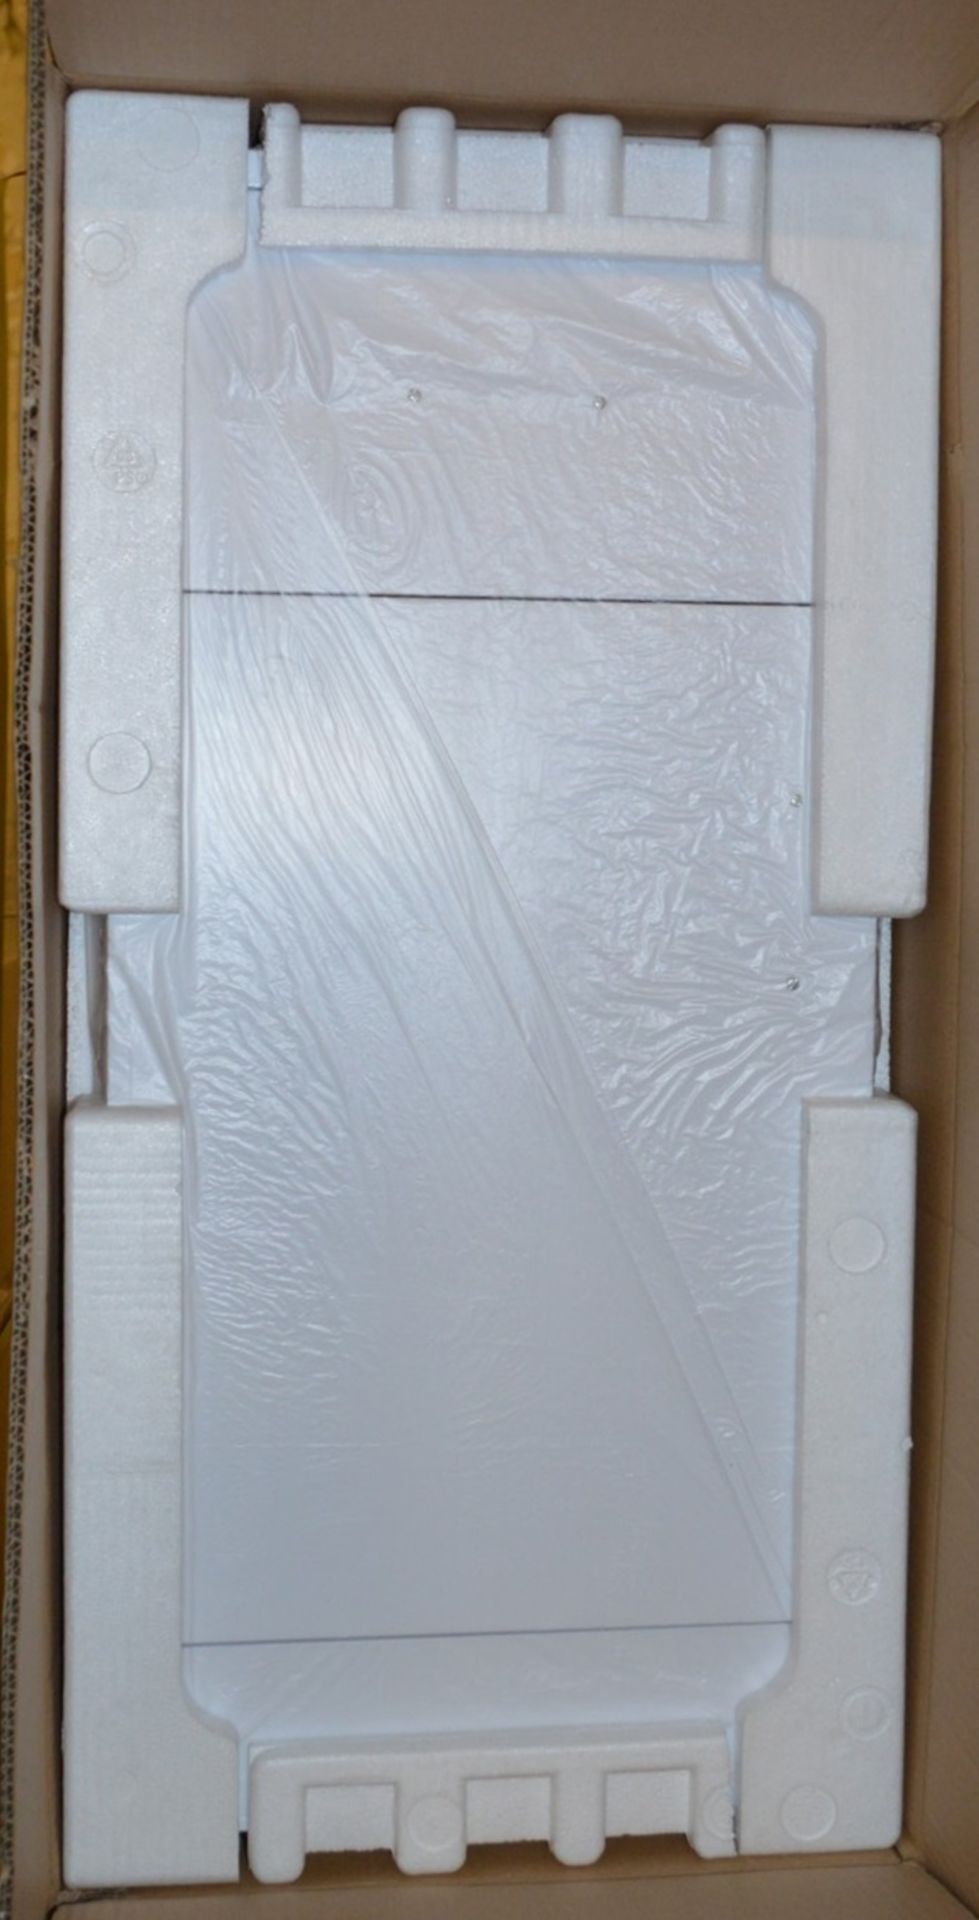 1 x Vogue Options White Gloss Bathroom 400mm Storage Cabinet - Vinyl Wrap Coating for Splash Water - Image 3 of 3